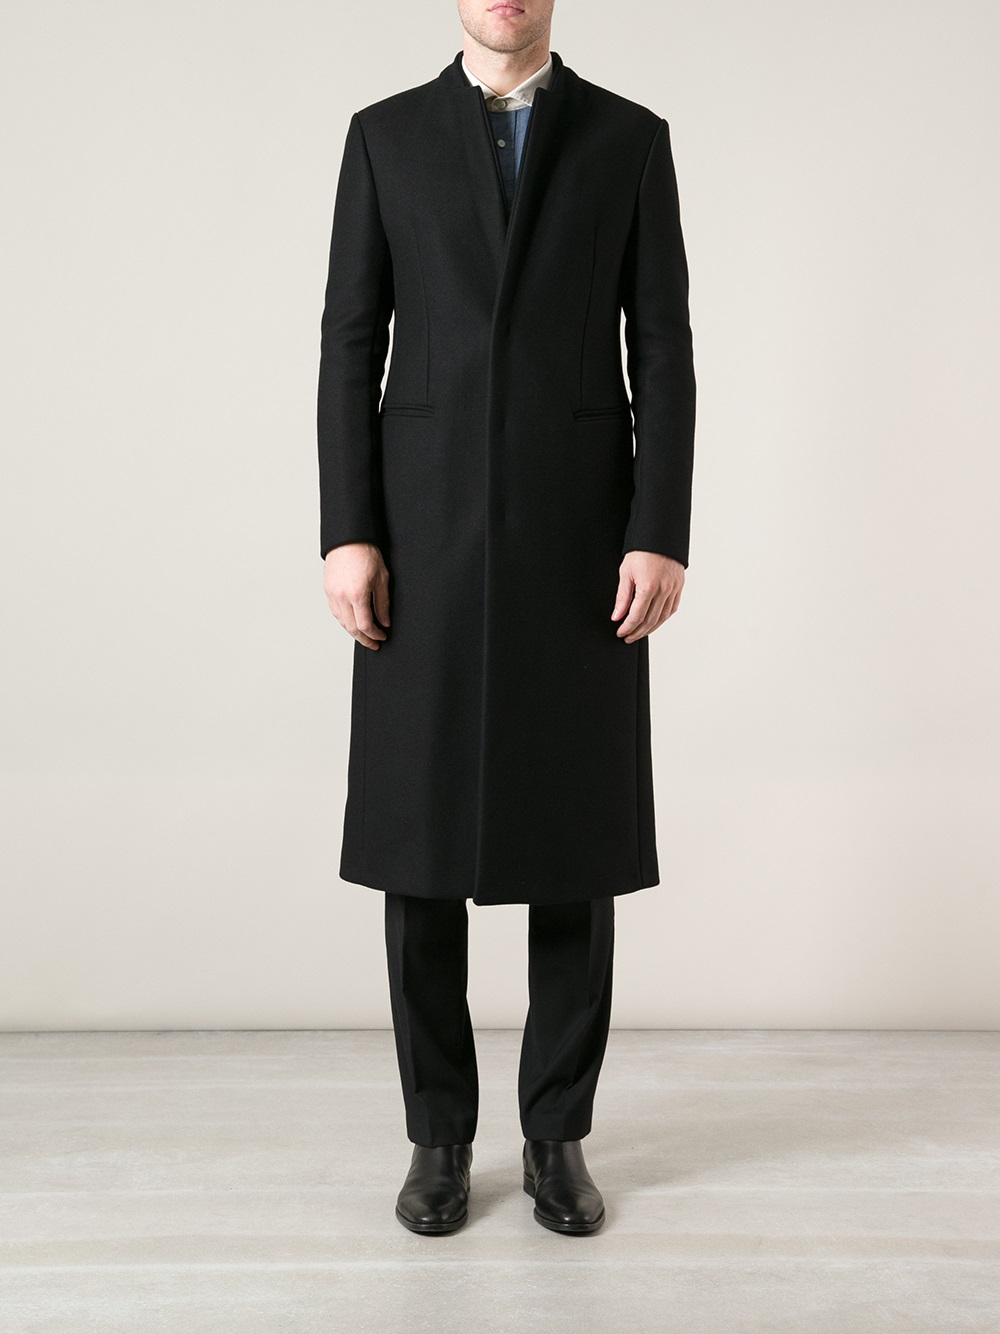 Lyst - Emporio Armani Formal Long Coat in Black for Men